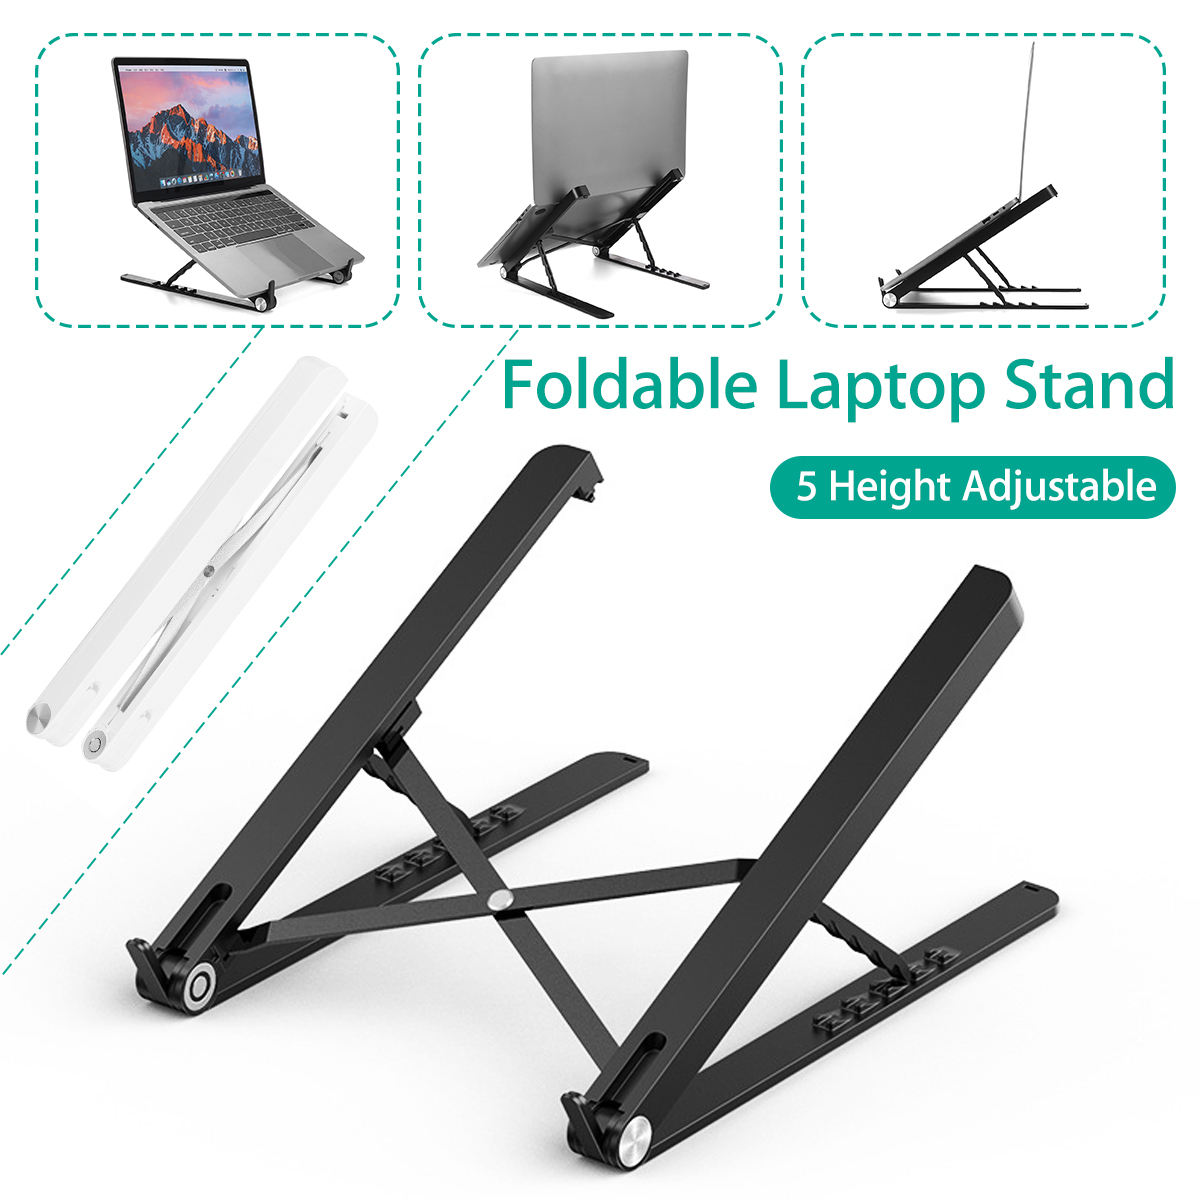 Foldable-5-Height-Adjustable-Heat-Dissipation-Telecommuting-Online-Learning-Desktop-Tablet-Laptop-St-1700967-4